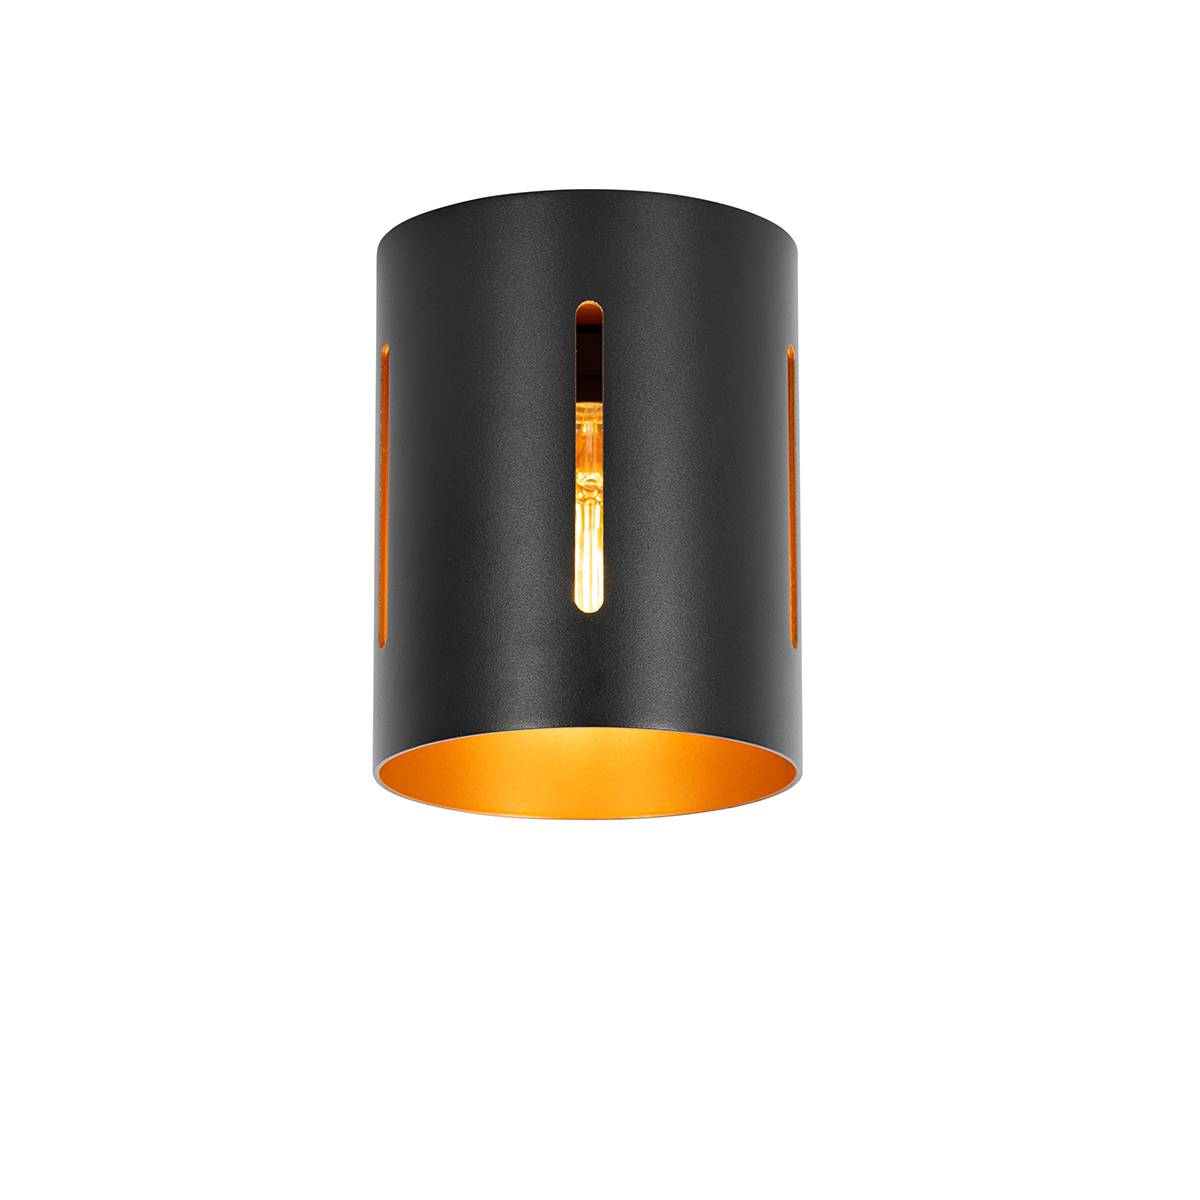 Design mennyezeti lámpa fekete, arany belsővel - Yana